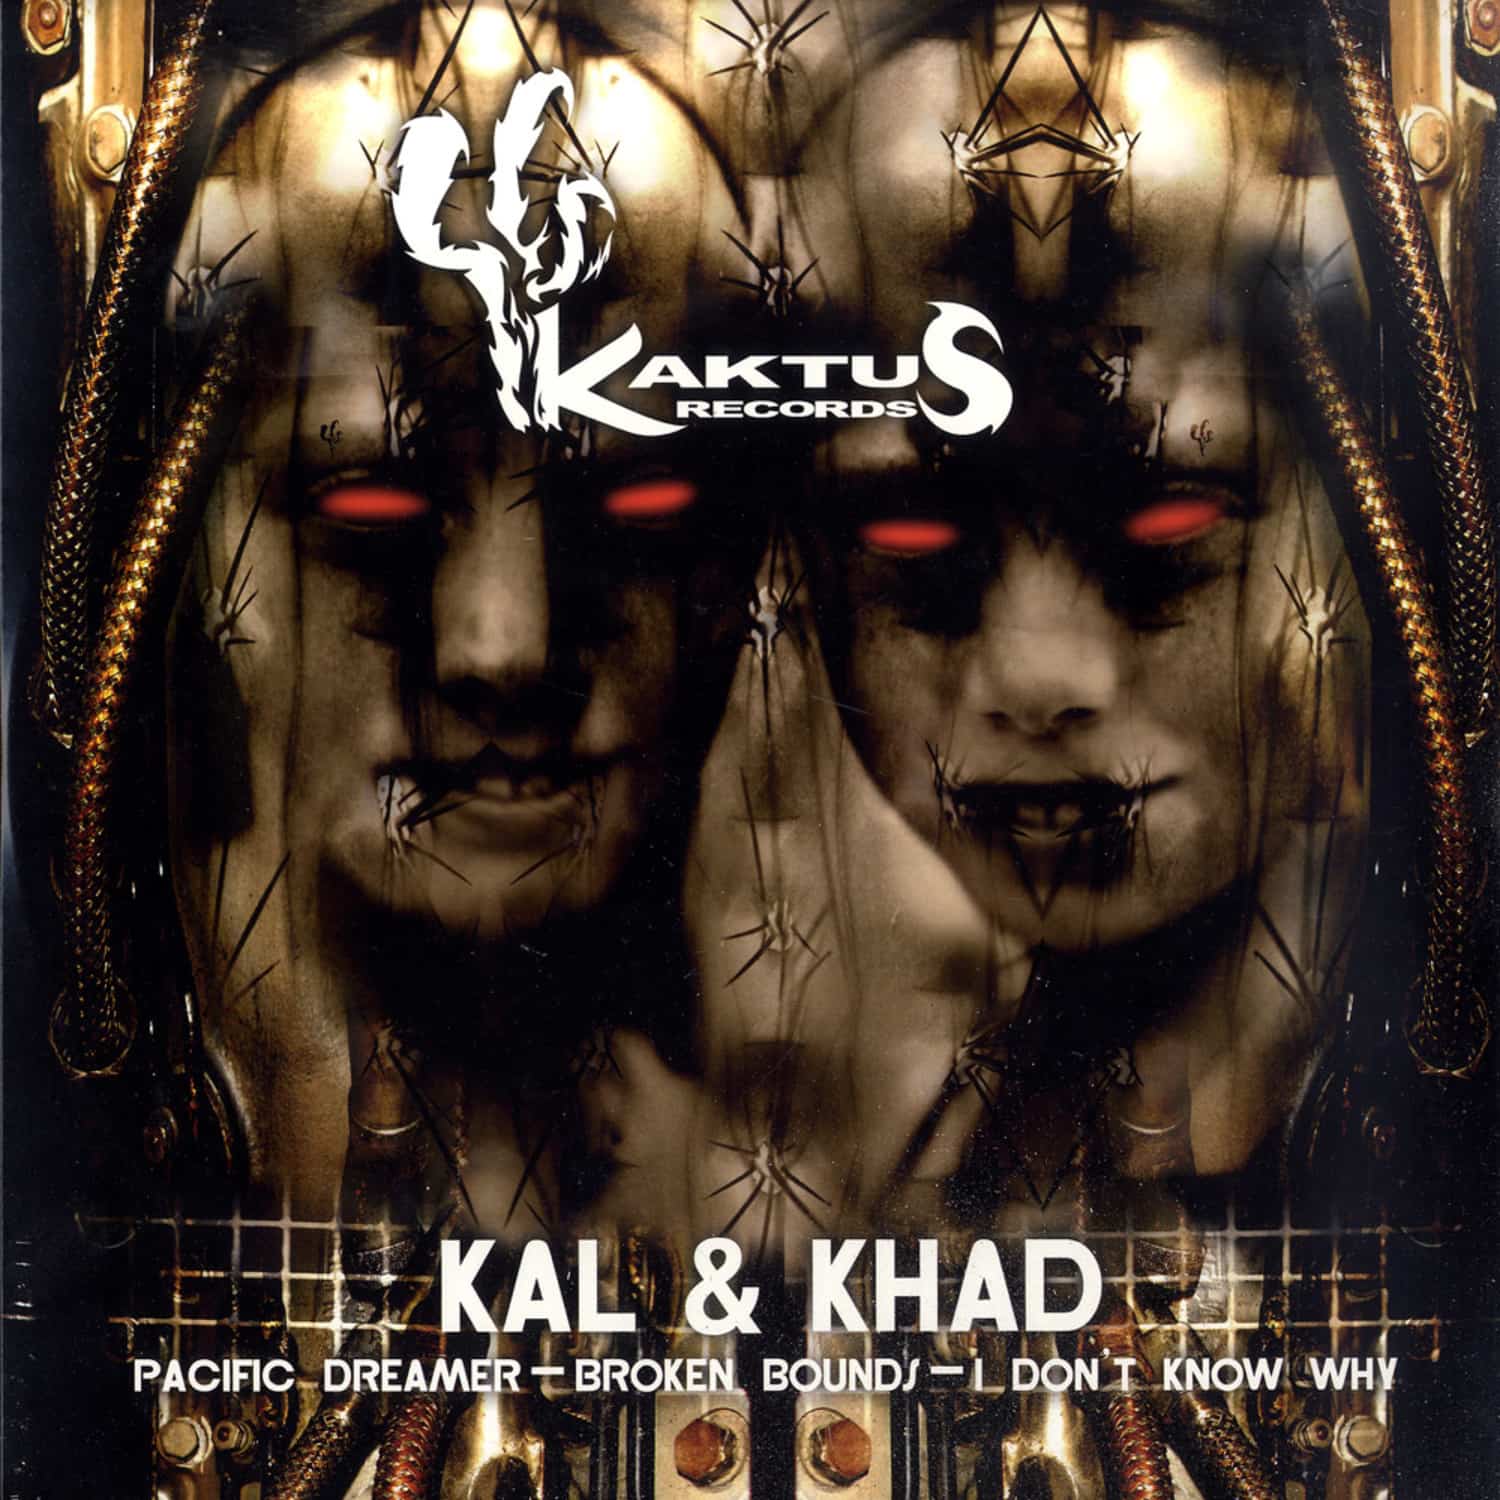 Kal & Khad - PACIFIC DREAMER